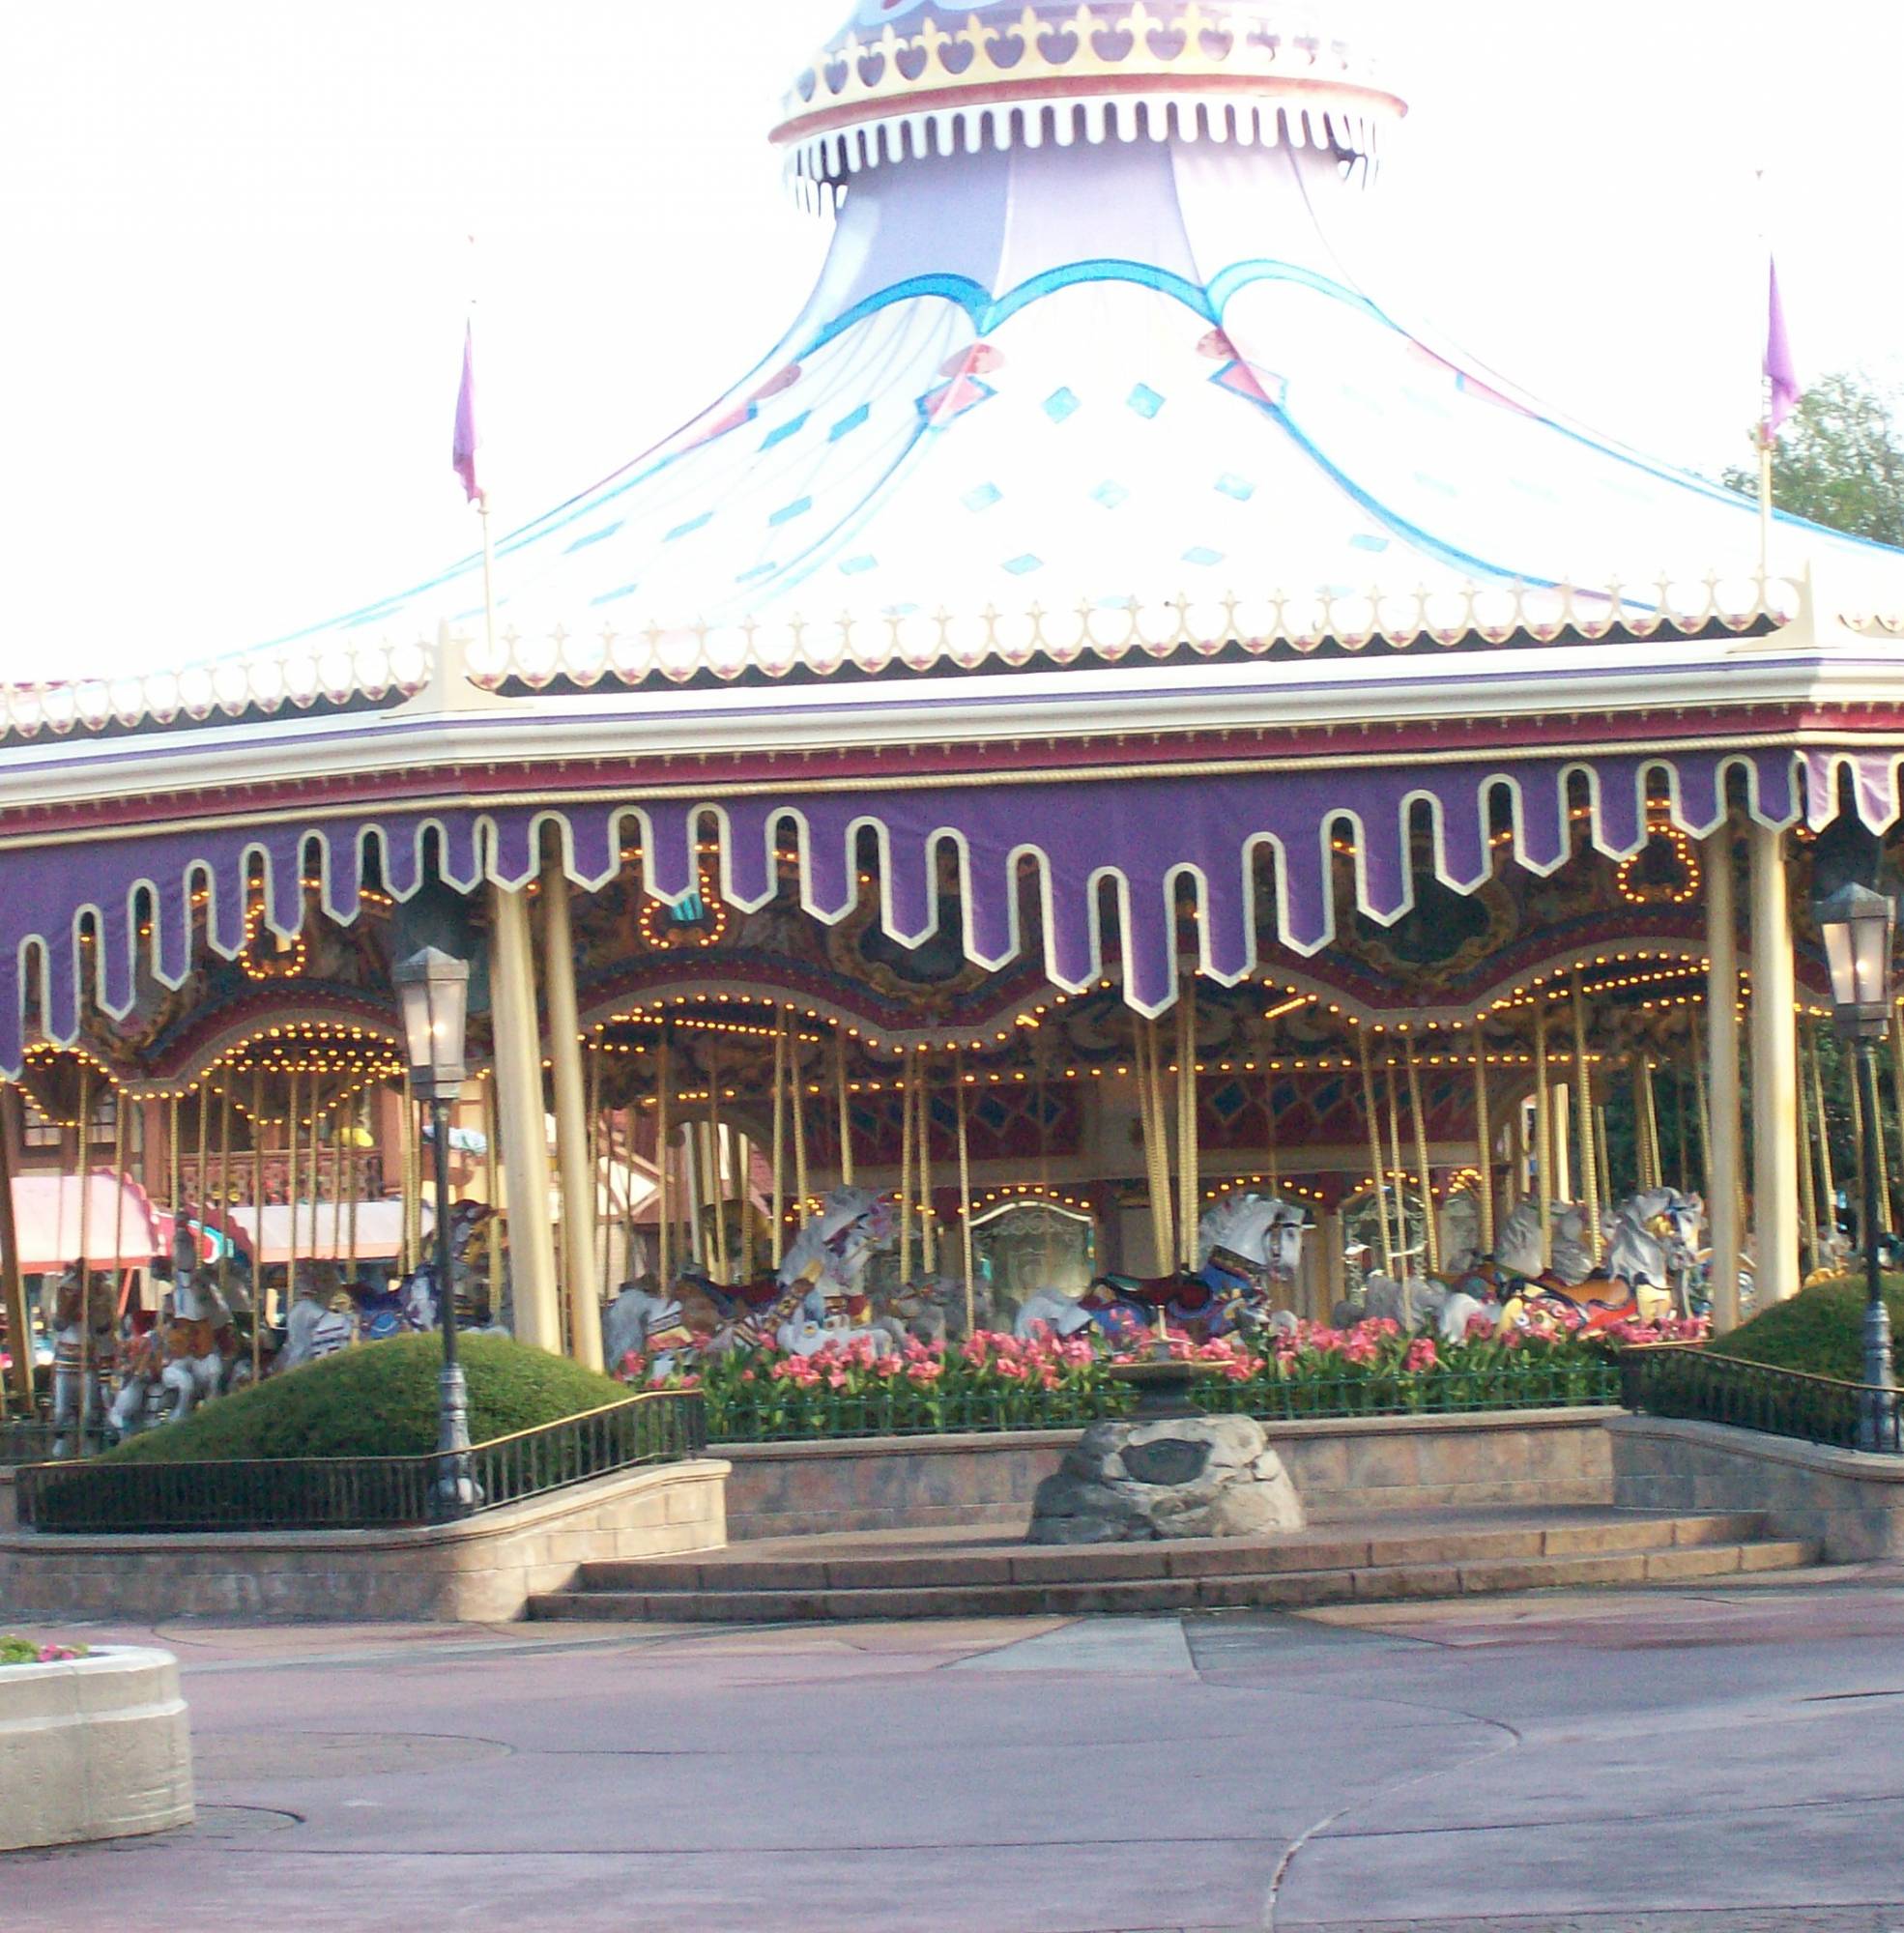 Cinderella's Golden Carousel in Fantasyland